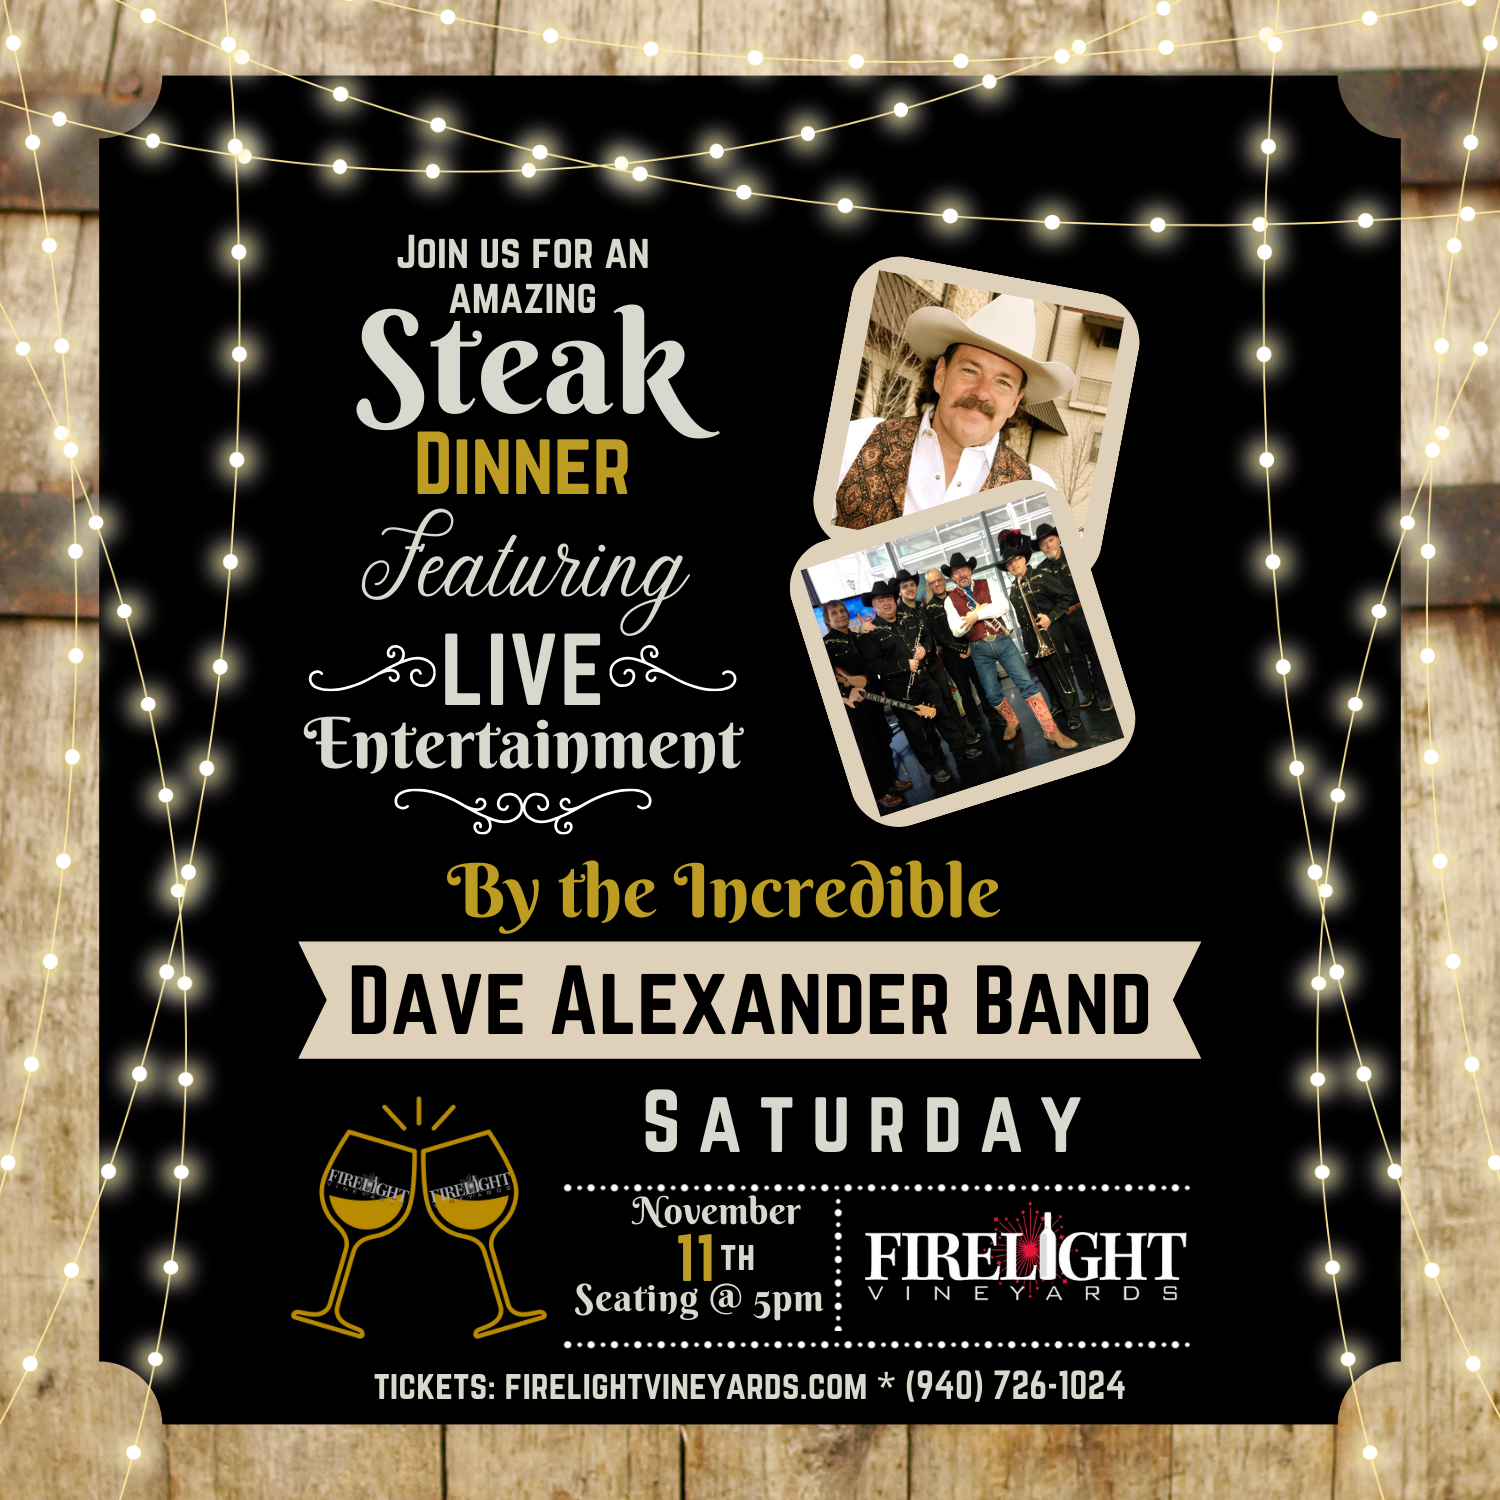 Product Image for Steak Dinner & Dave Alexander Band